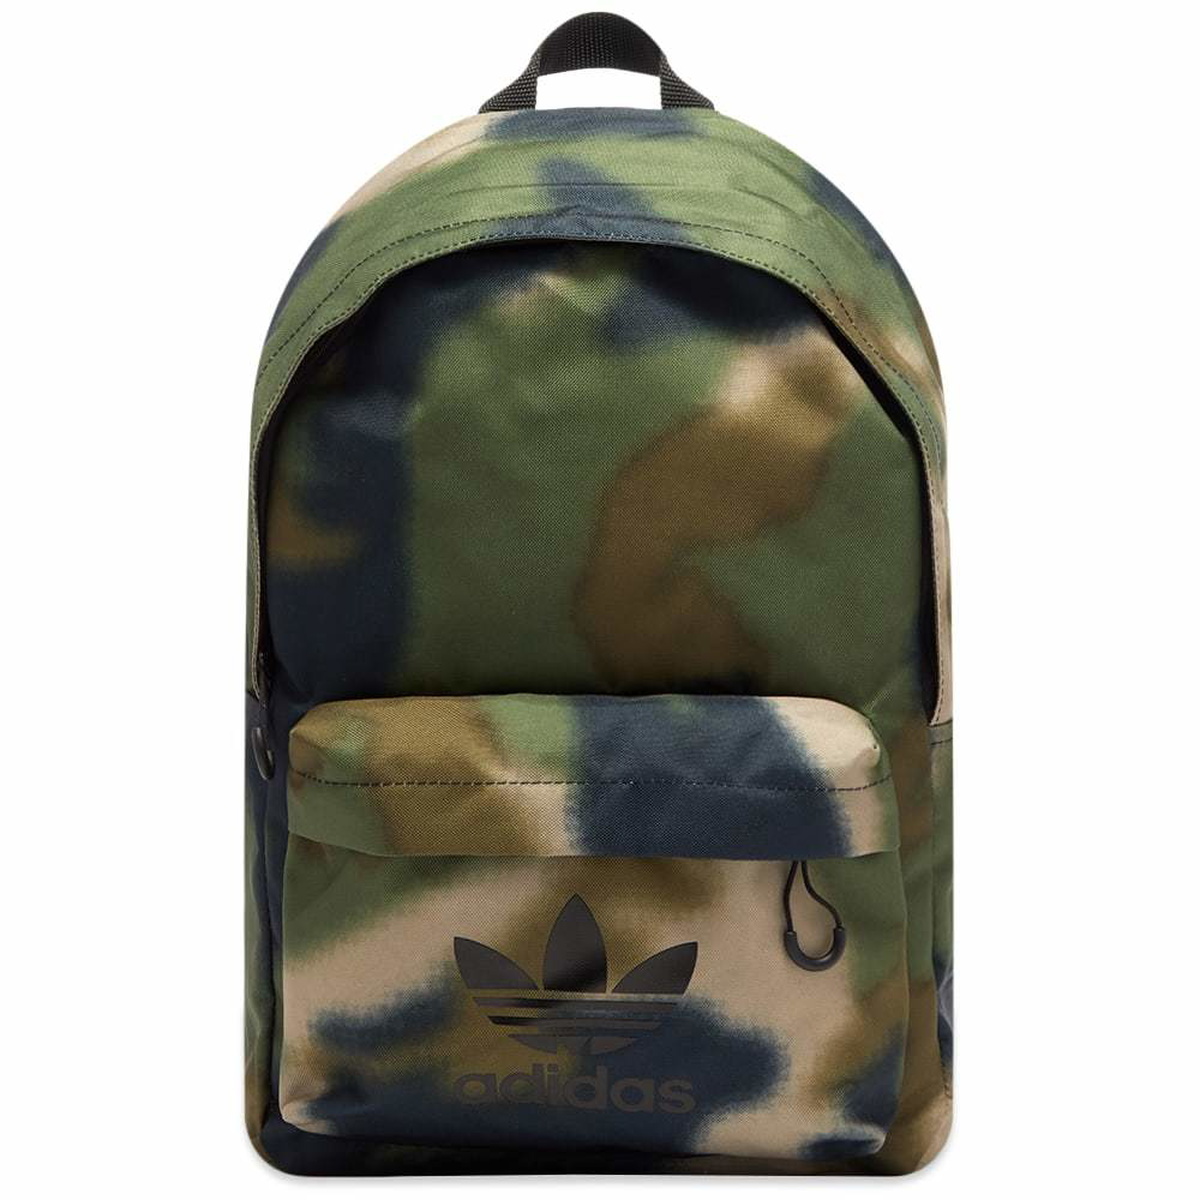 Adidas Camo Backpack